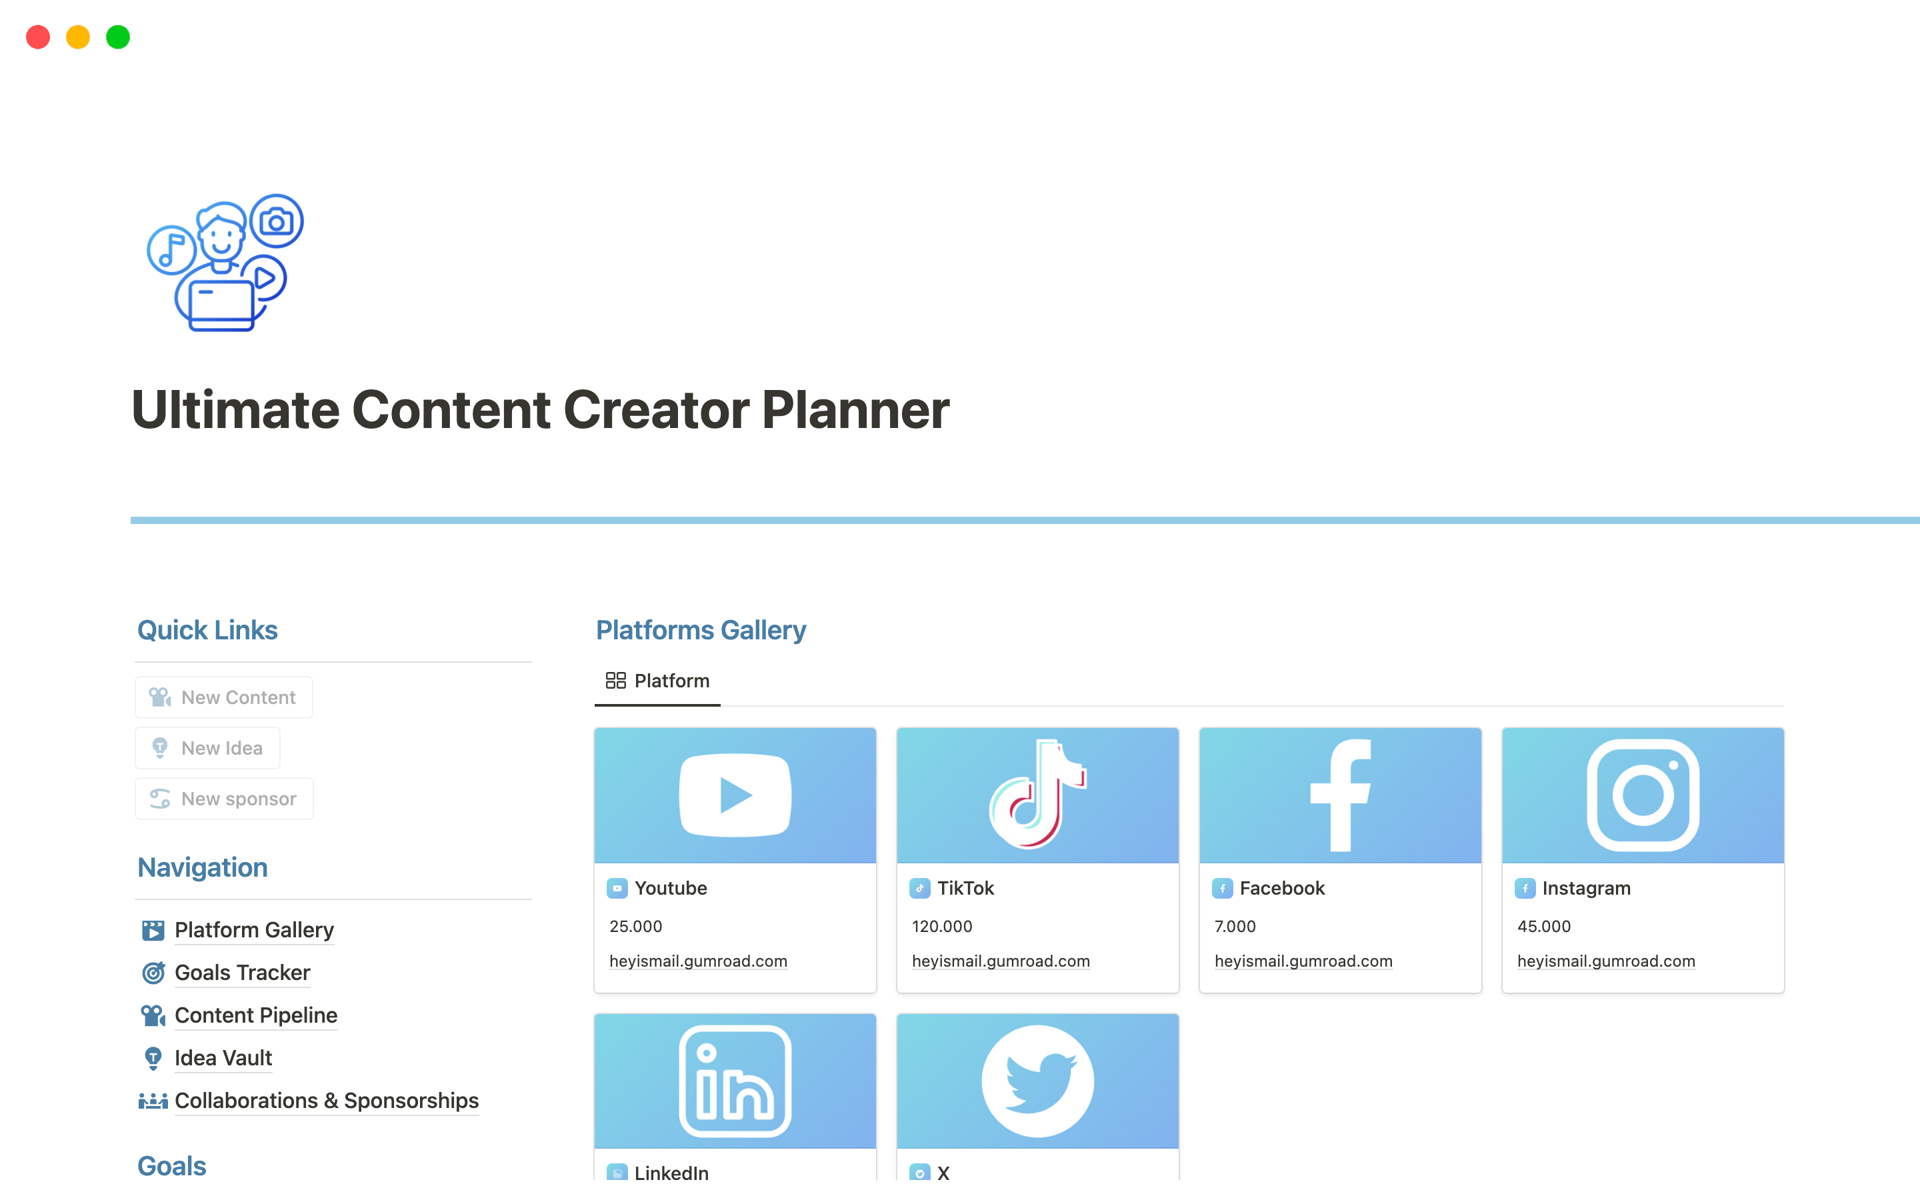 Mallin esikatselu nimelle Ultimate Content Creator Planner 